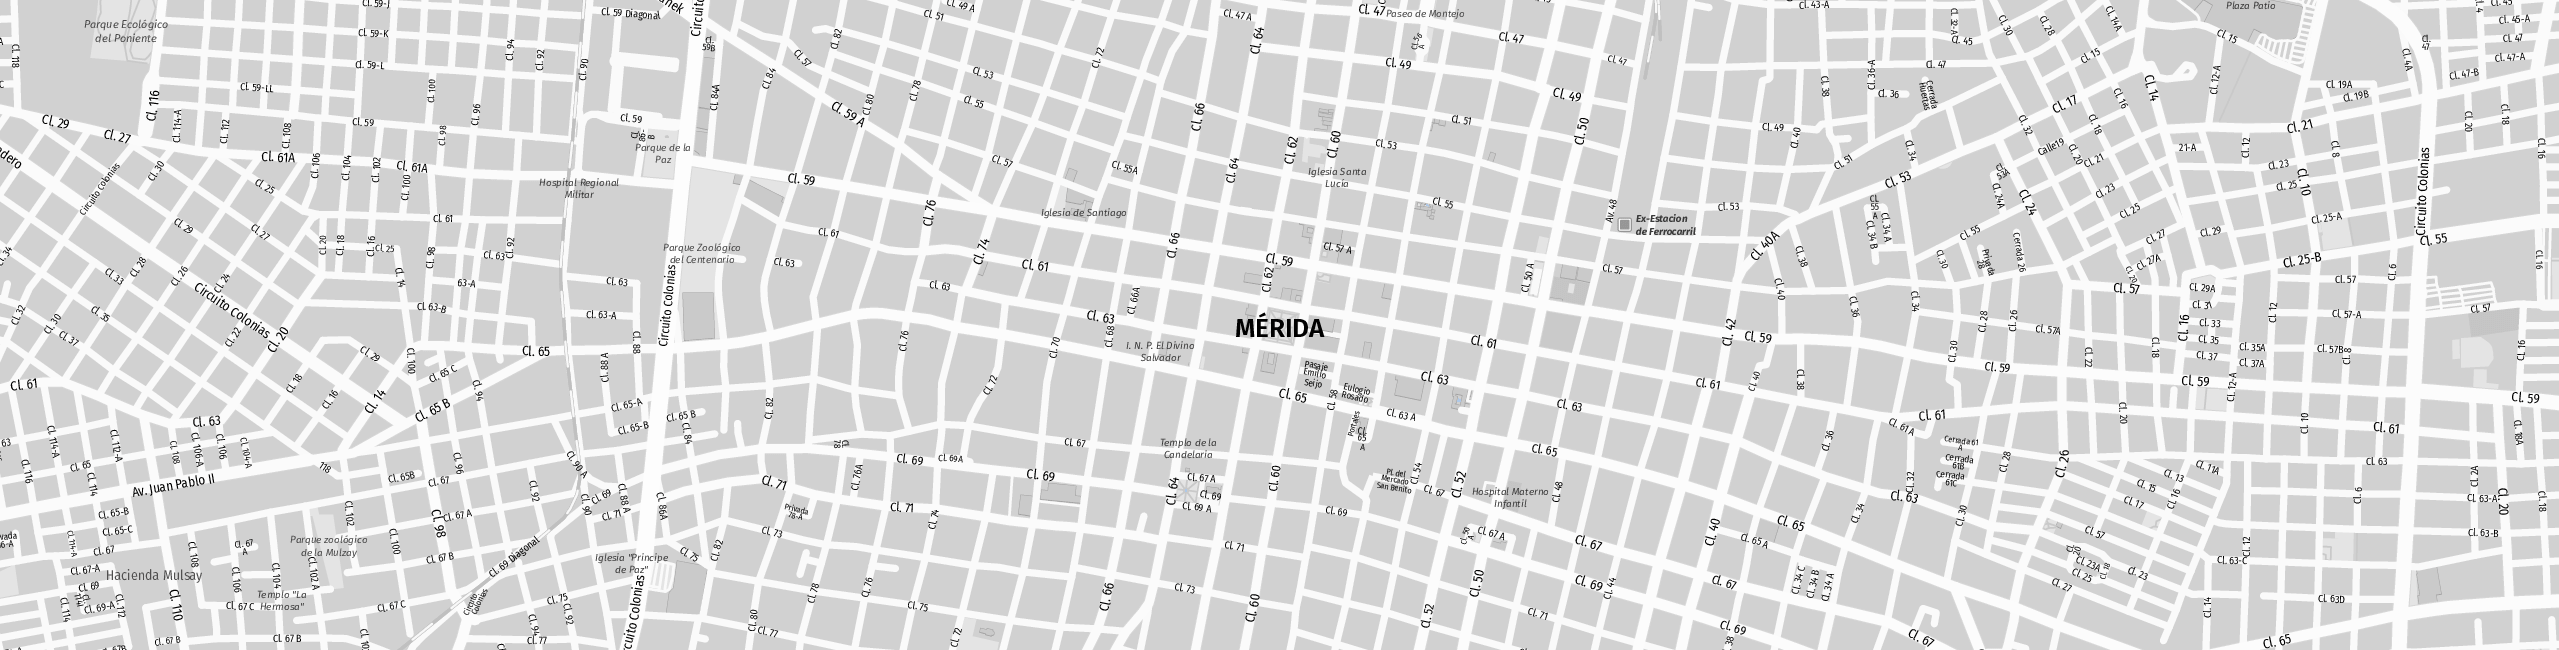 Stadtplan Mérida zum Downloaden.